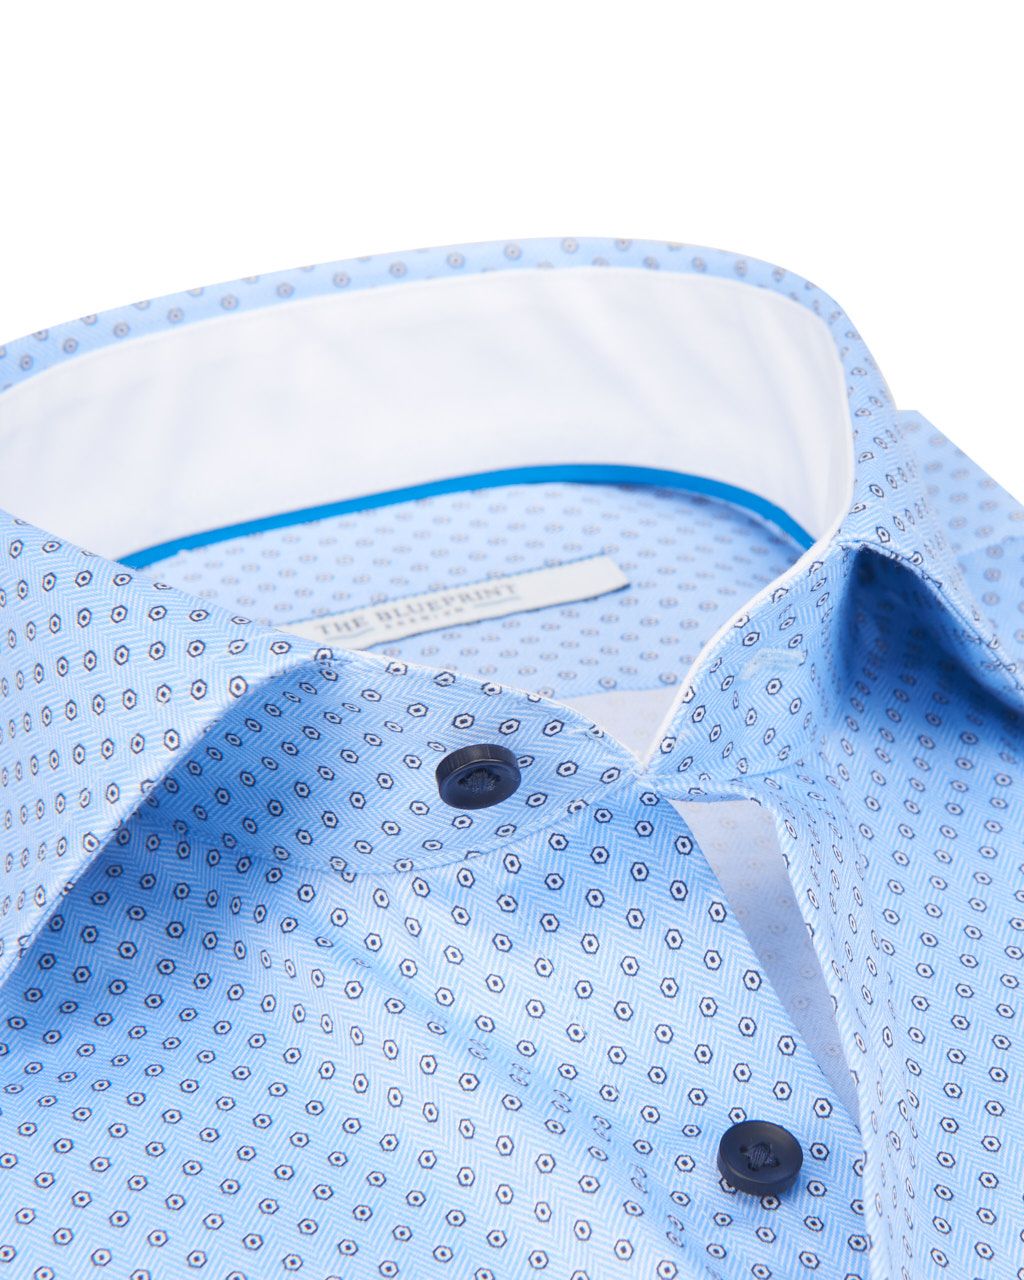 The BLUEPRINT Premium Trendy overhemd LM Lichtblauw uni 061905-001-L